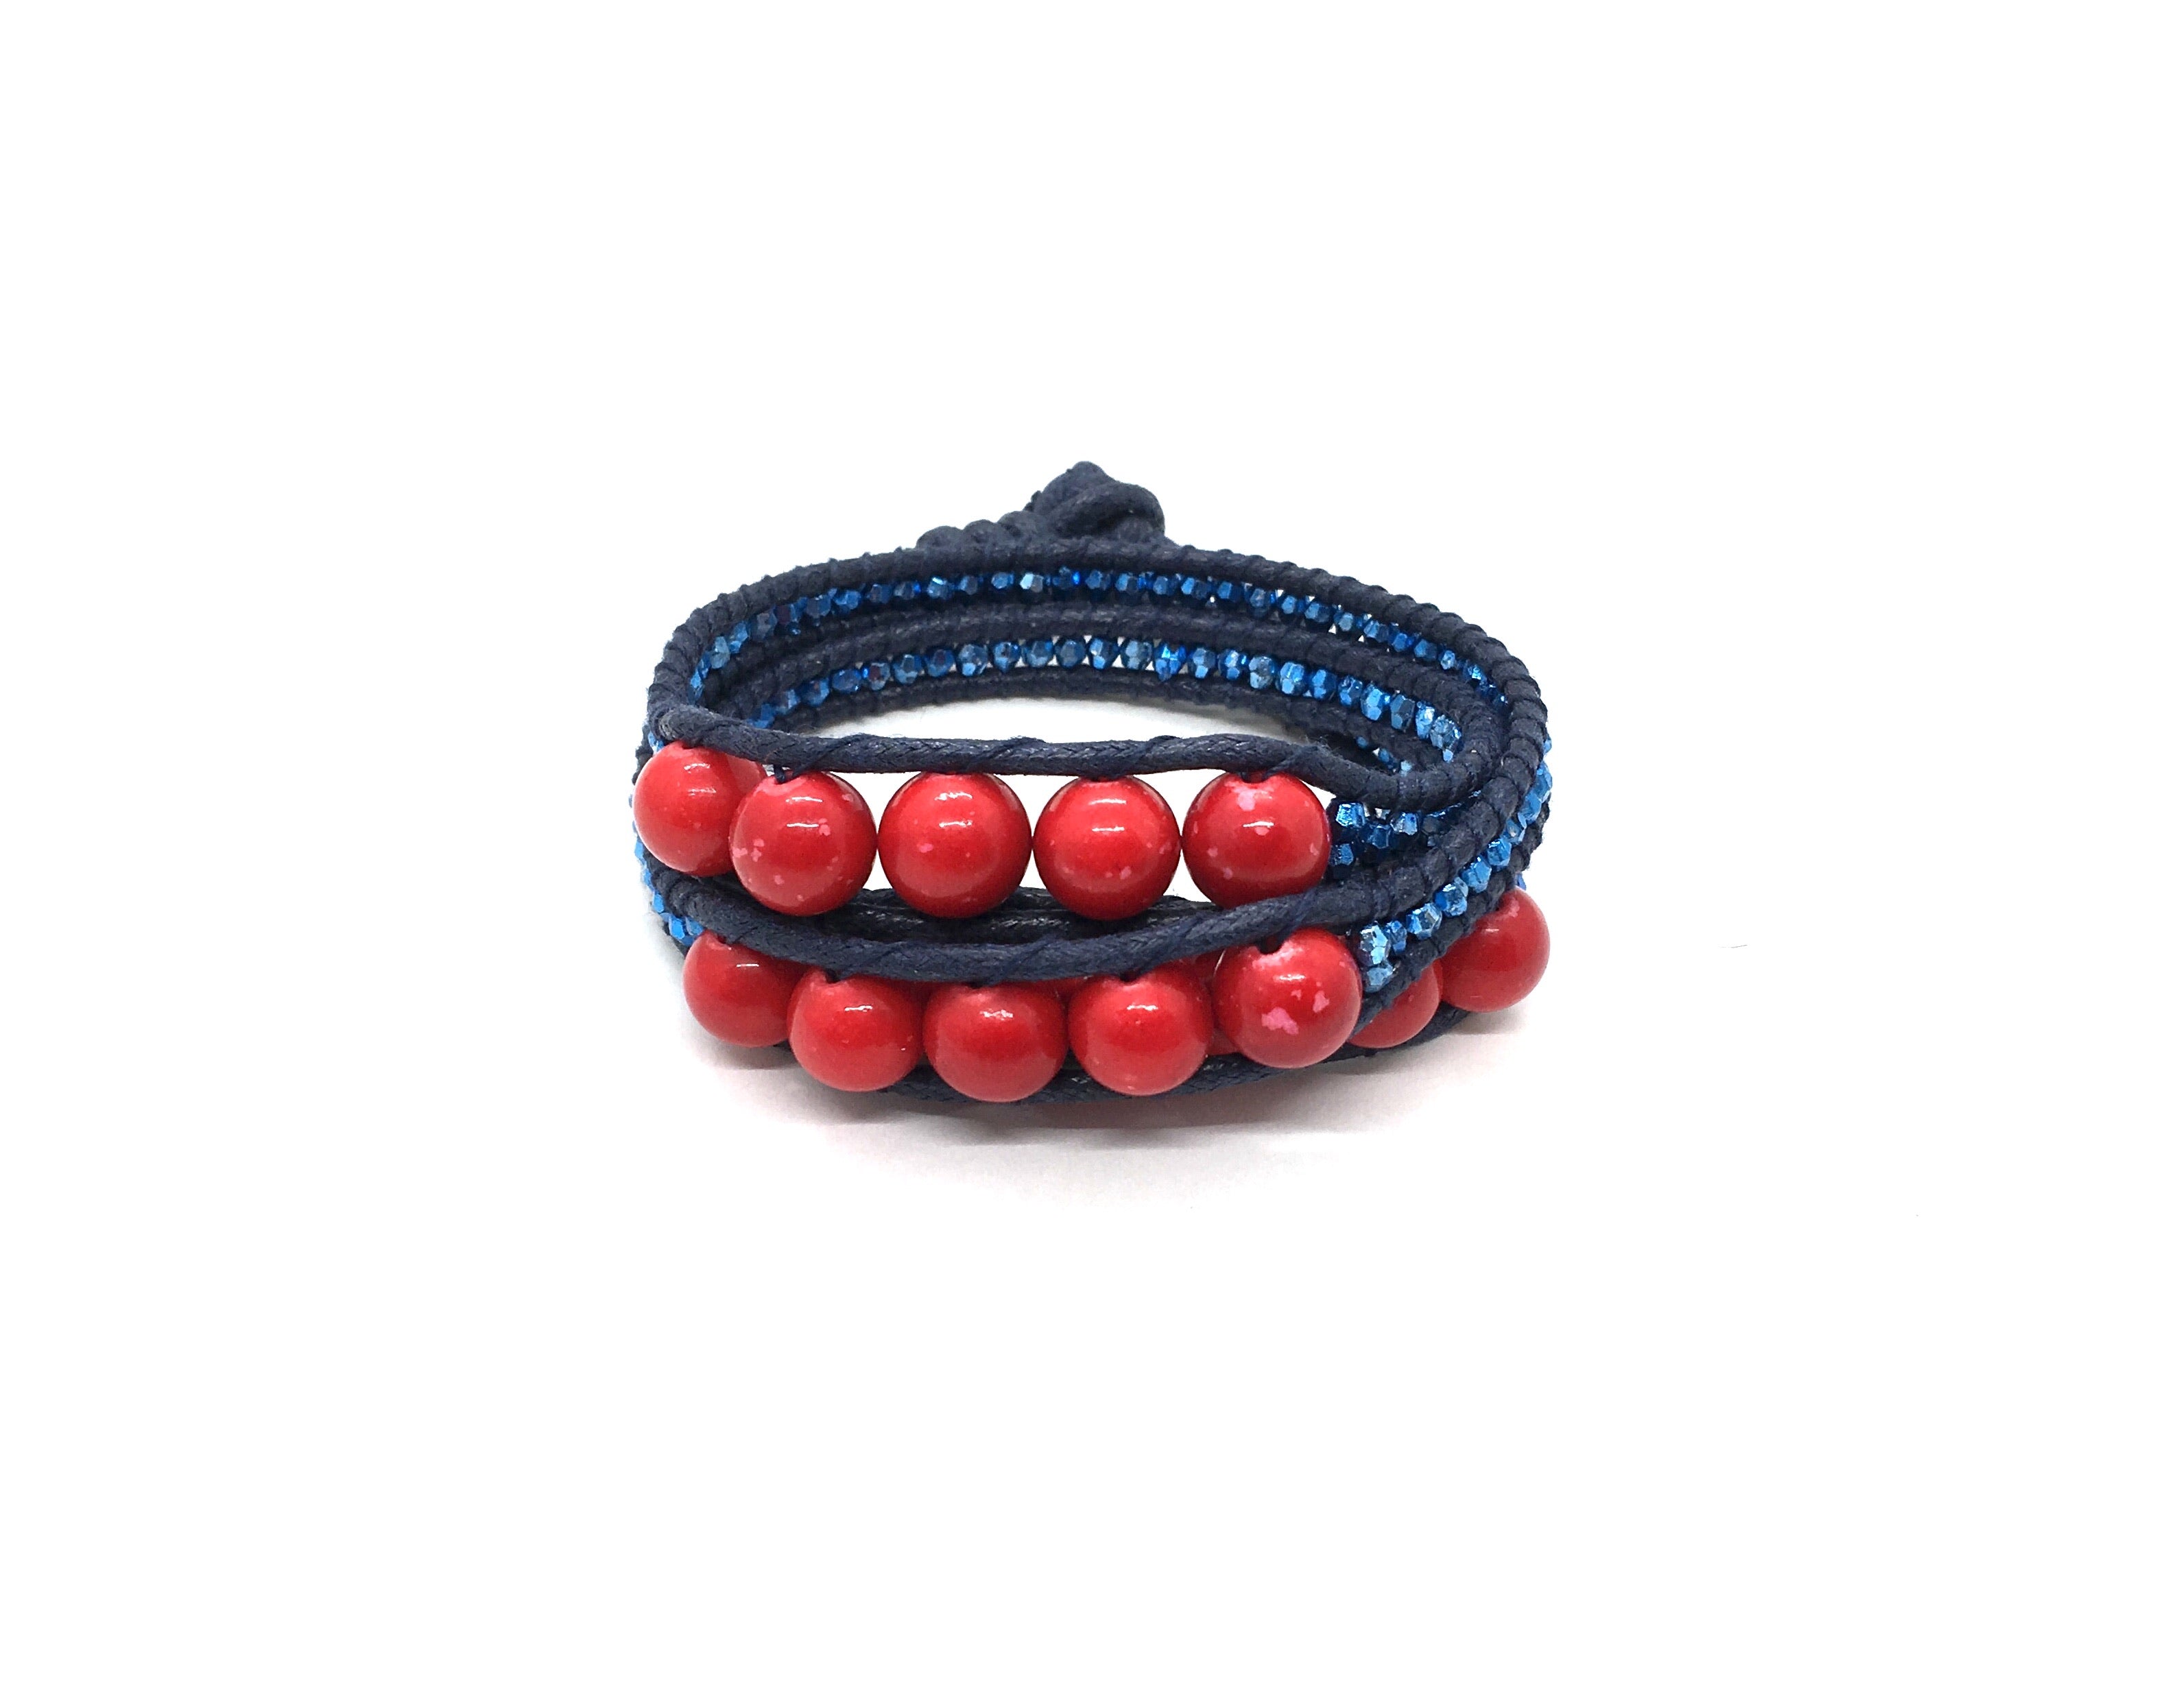 Wraparound red stone bracelet, metalic blue resin side bead, dark blue cord, dark blue thread.